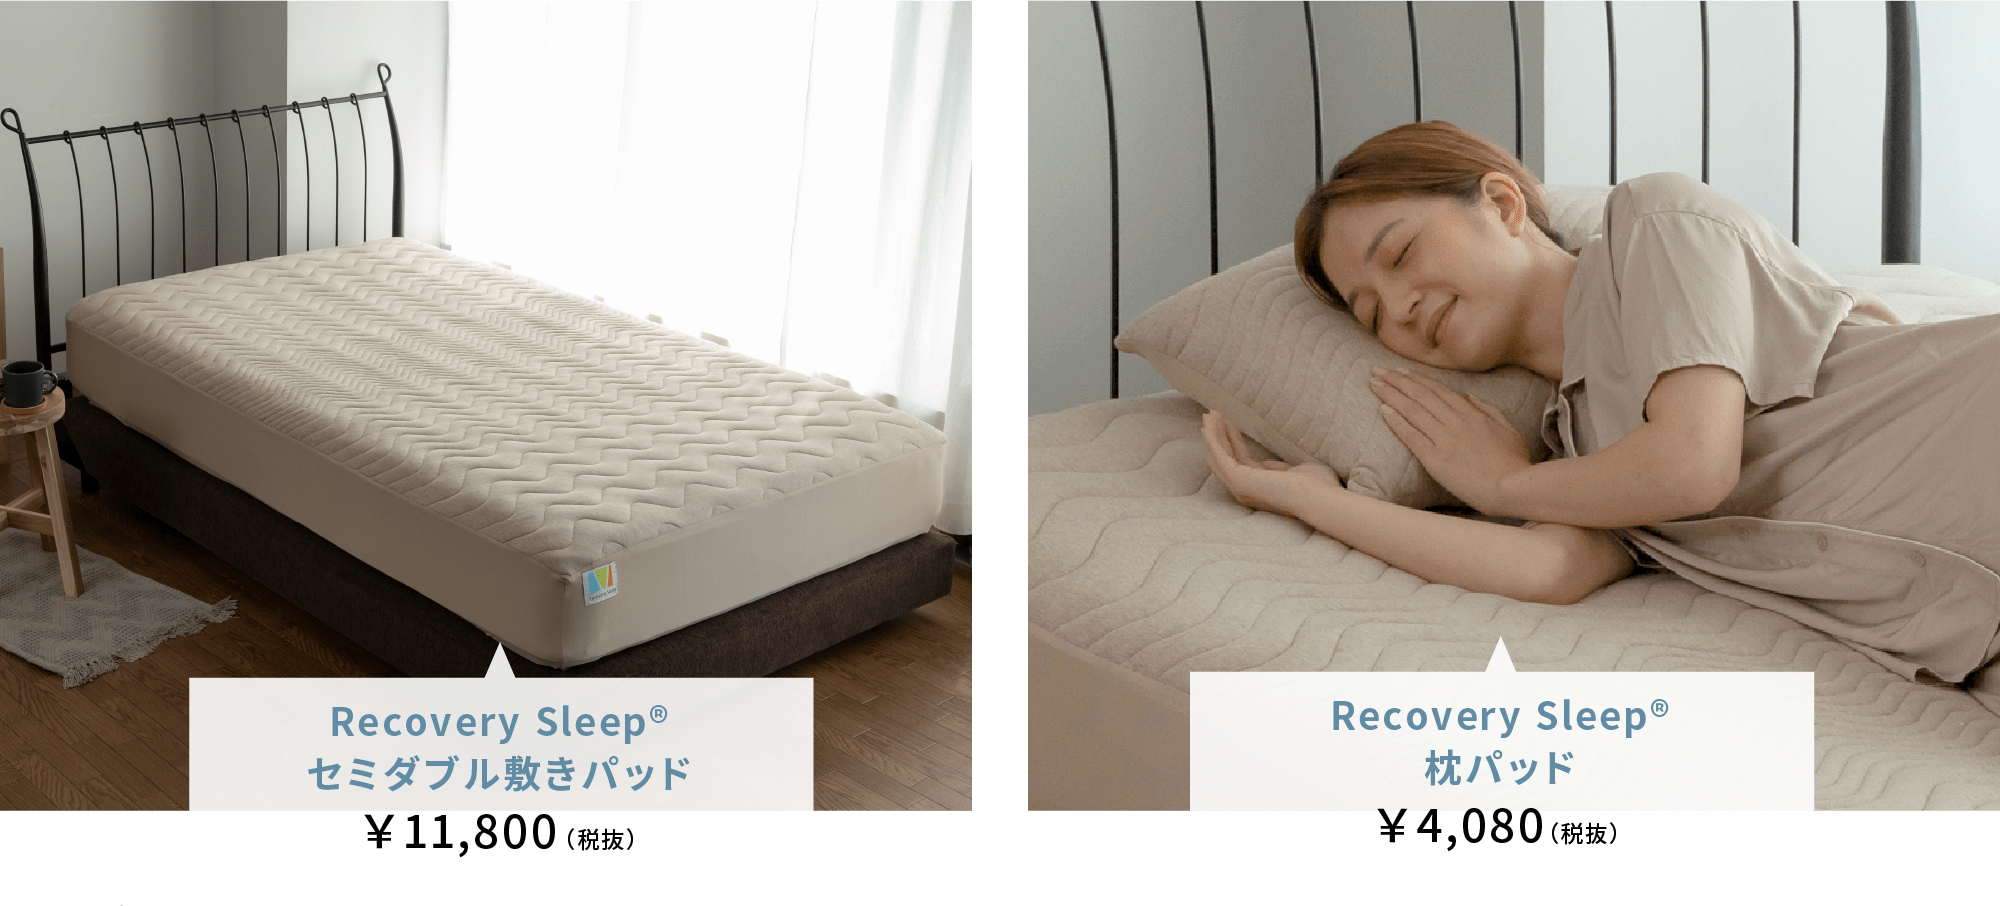 Recovery Sleep®シングル敷きパッド ￥9,900（税抜）Recovery Sleep®枕パッド ￥4,080（税抜）